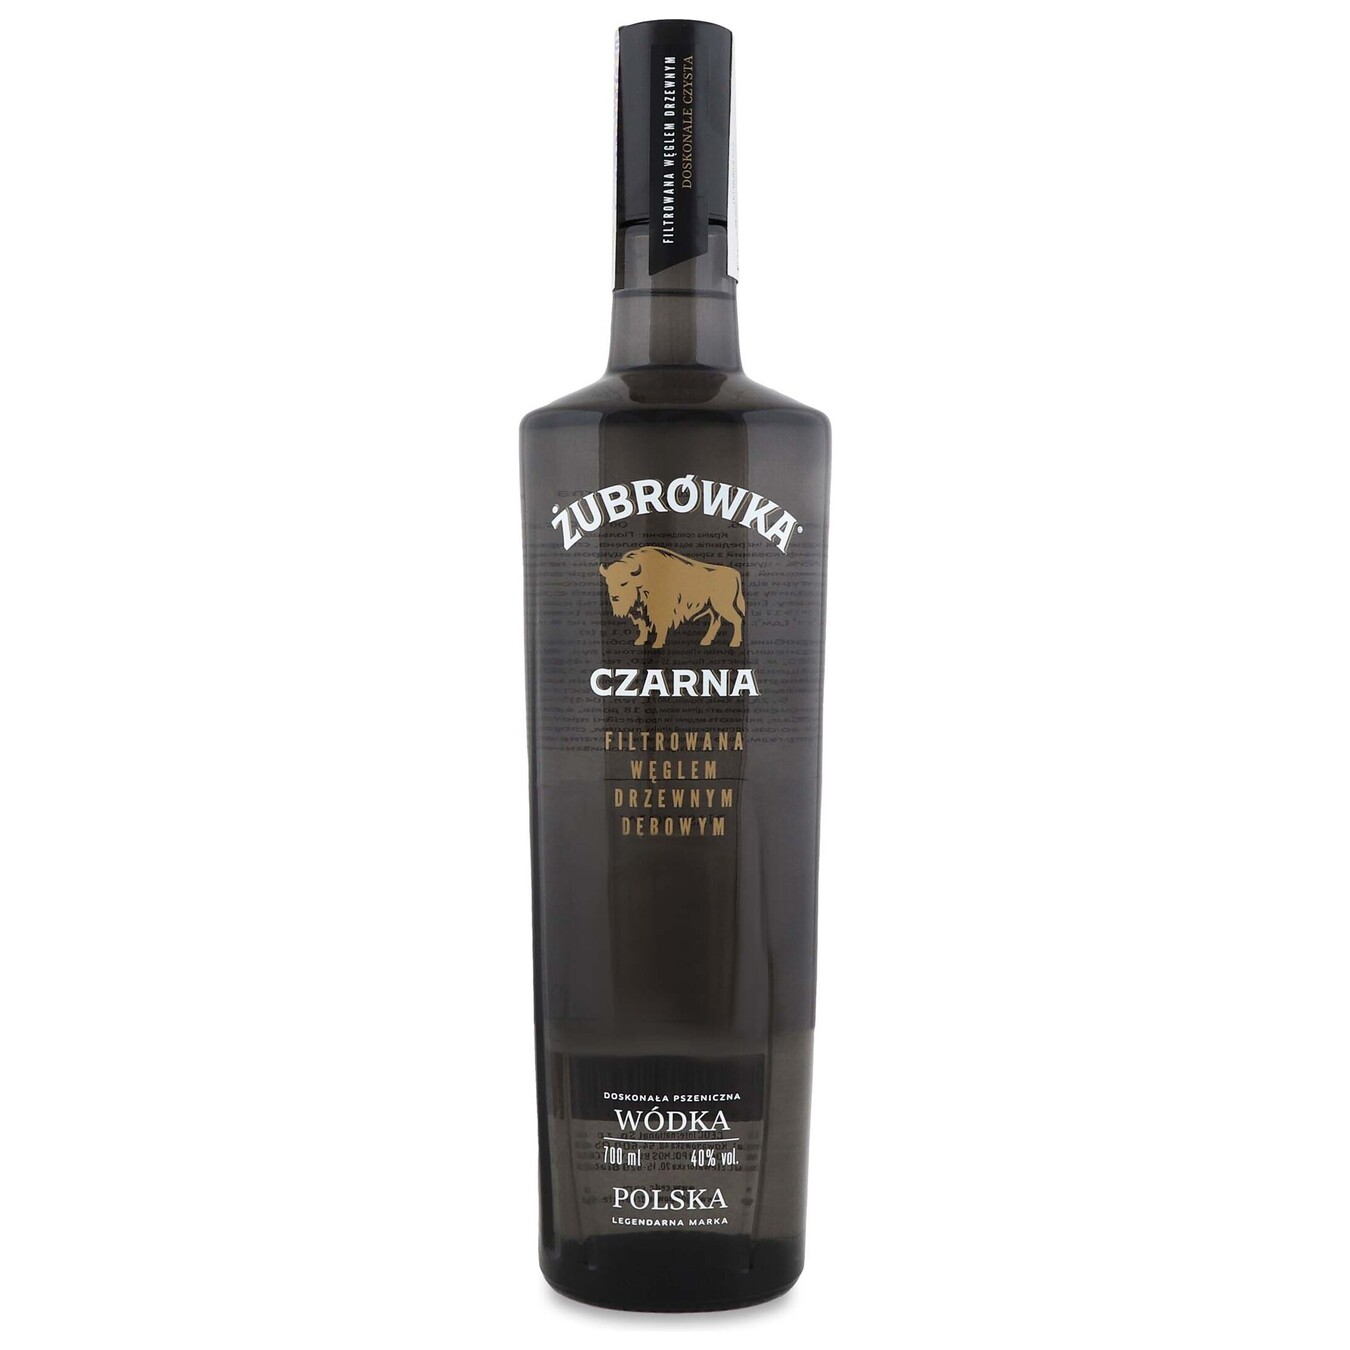 Zubrowka Vodka Czarna 40% 0.7l